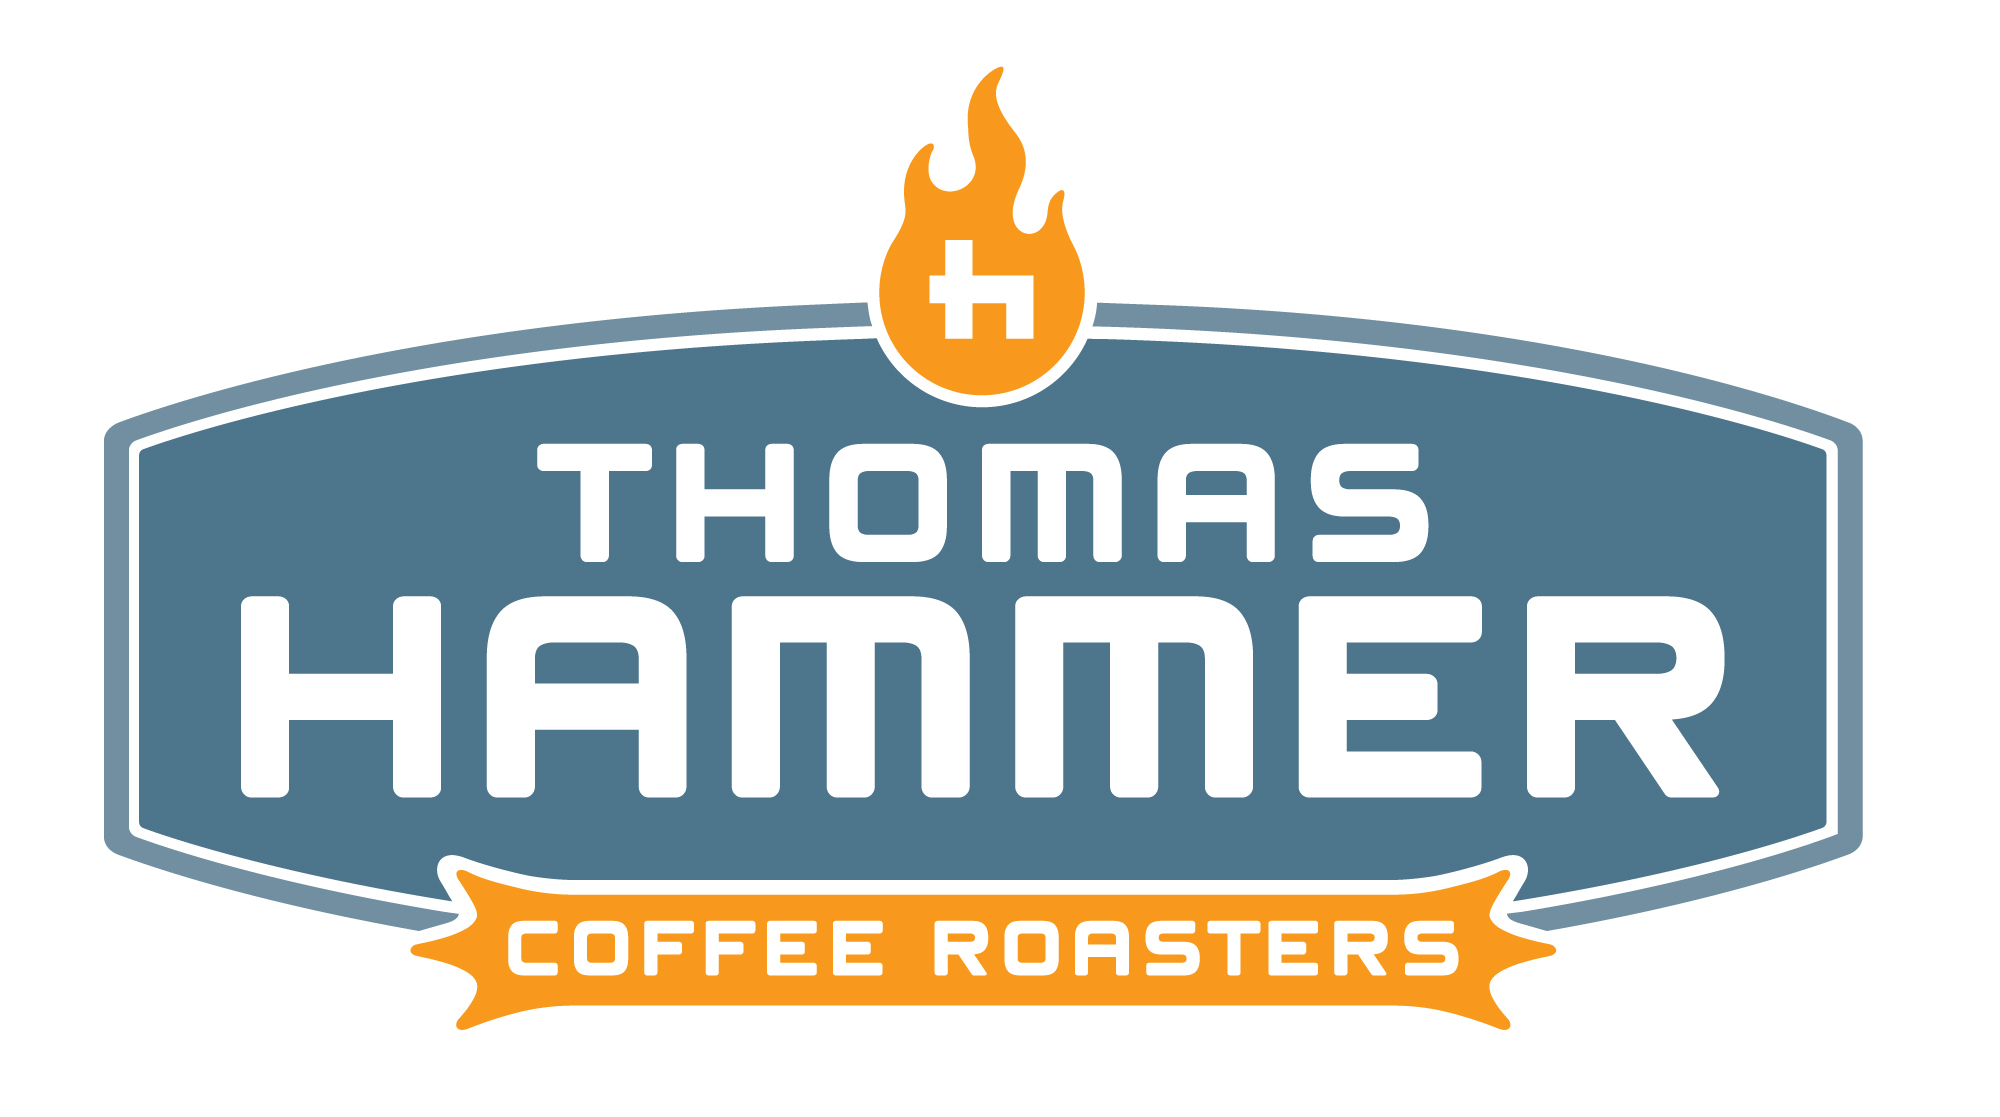 Thomas Hammer Coffee Roasters logo.